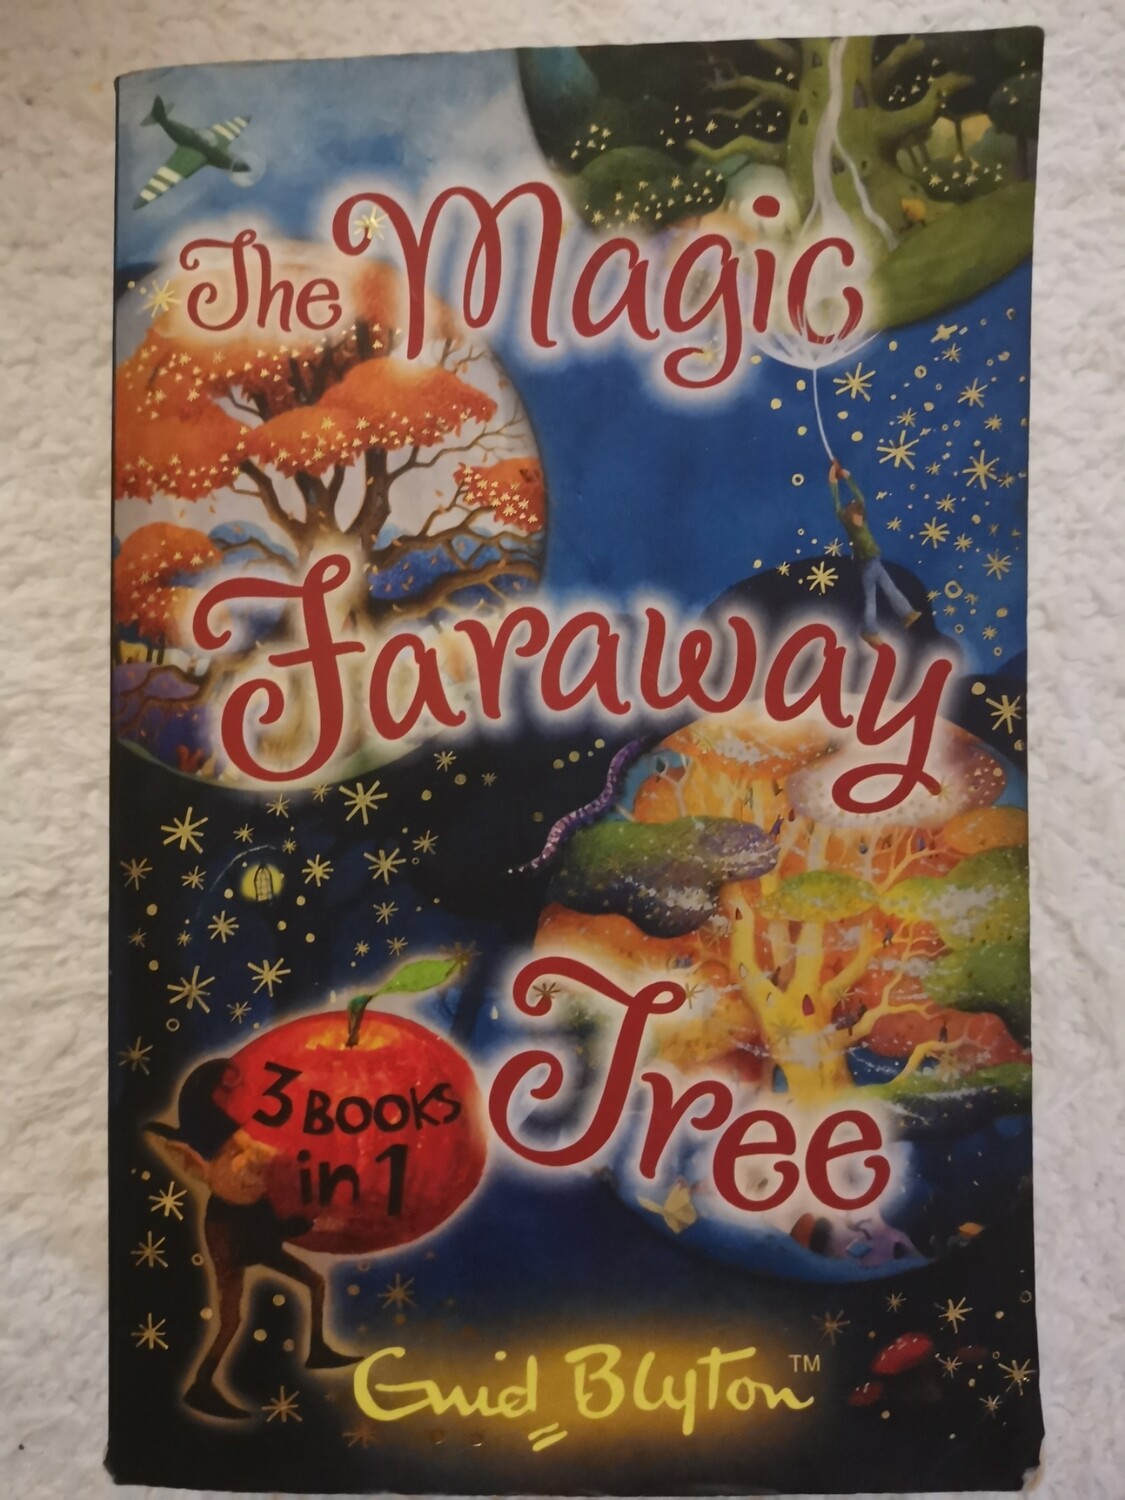 The magic faraway tree, Enid Blyton